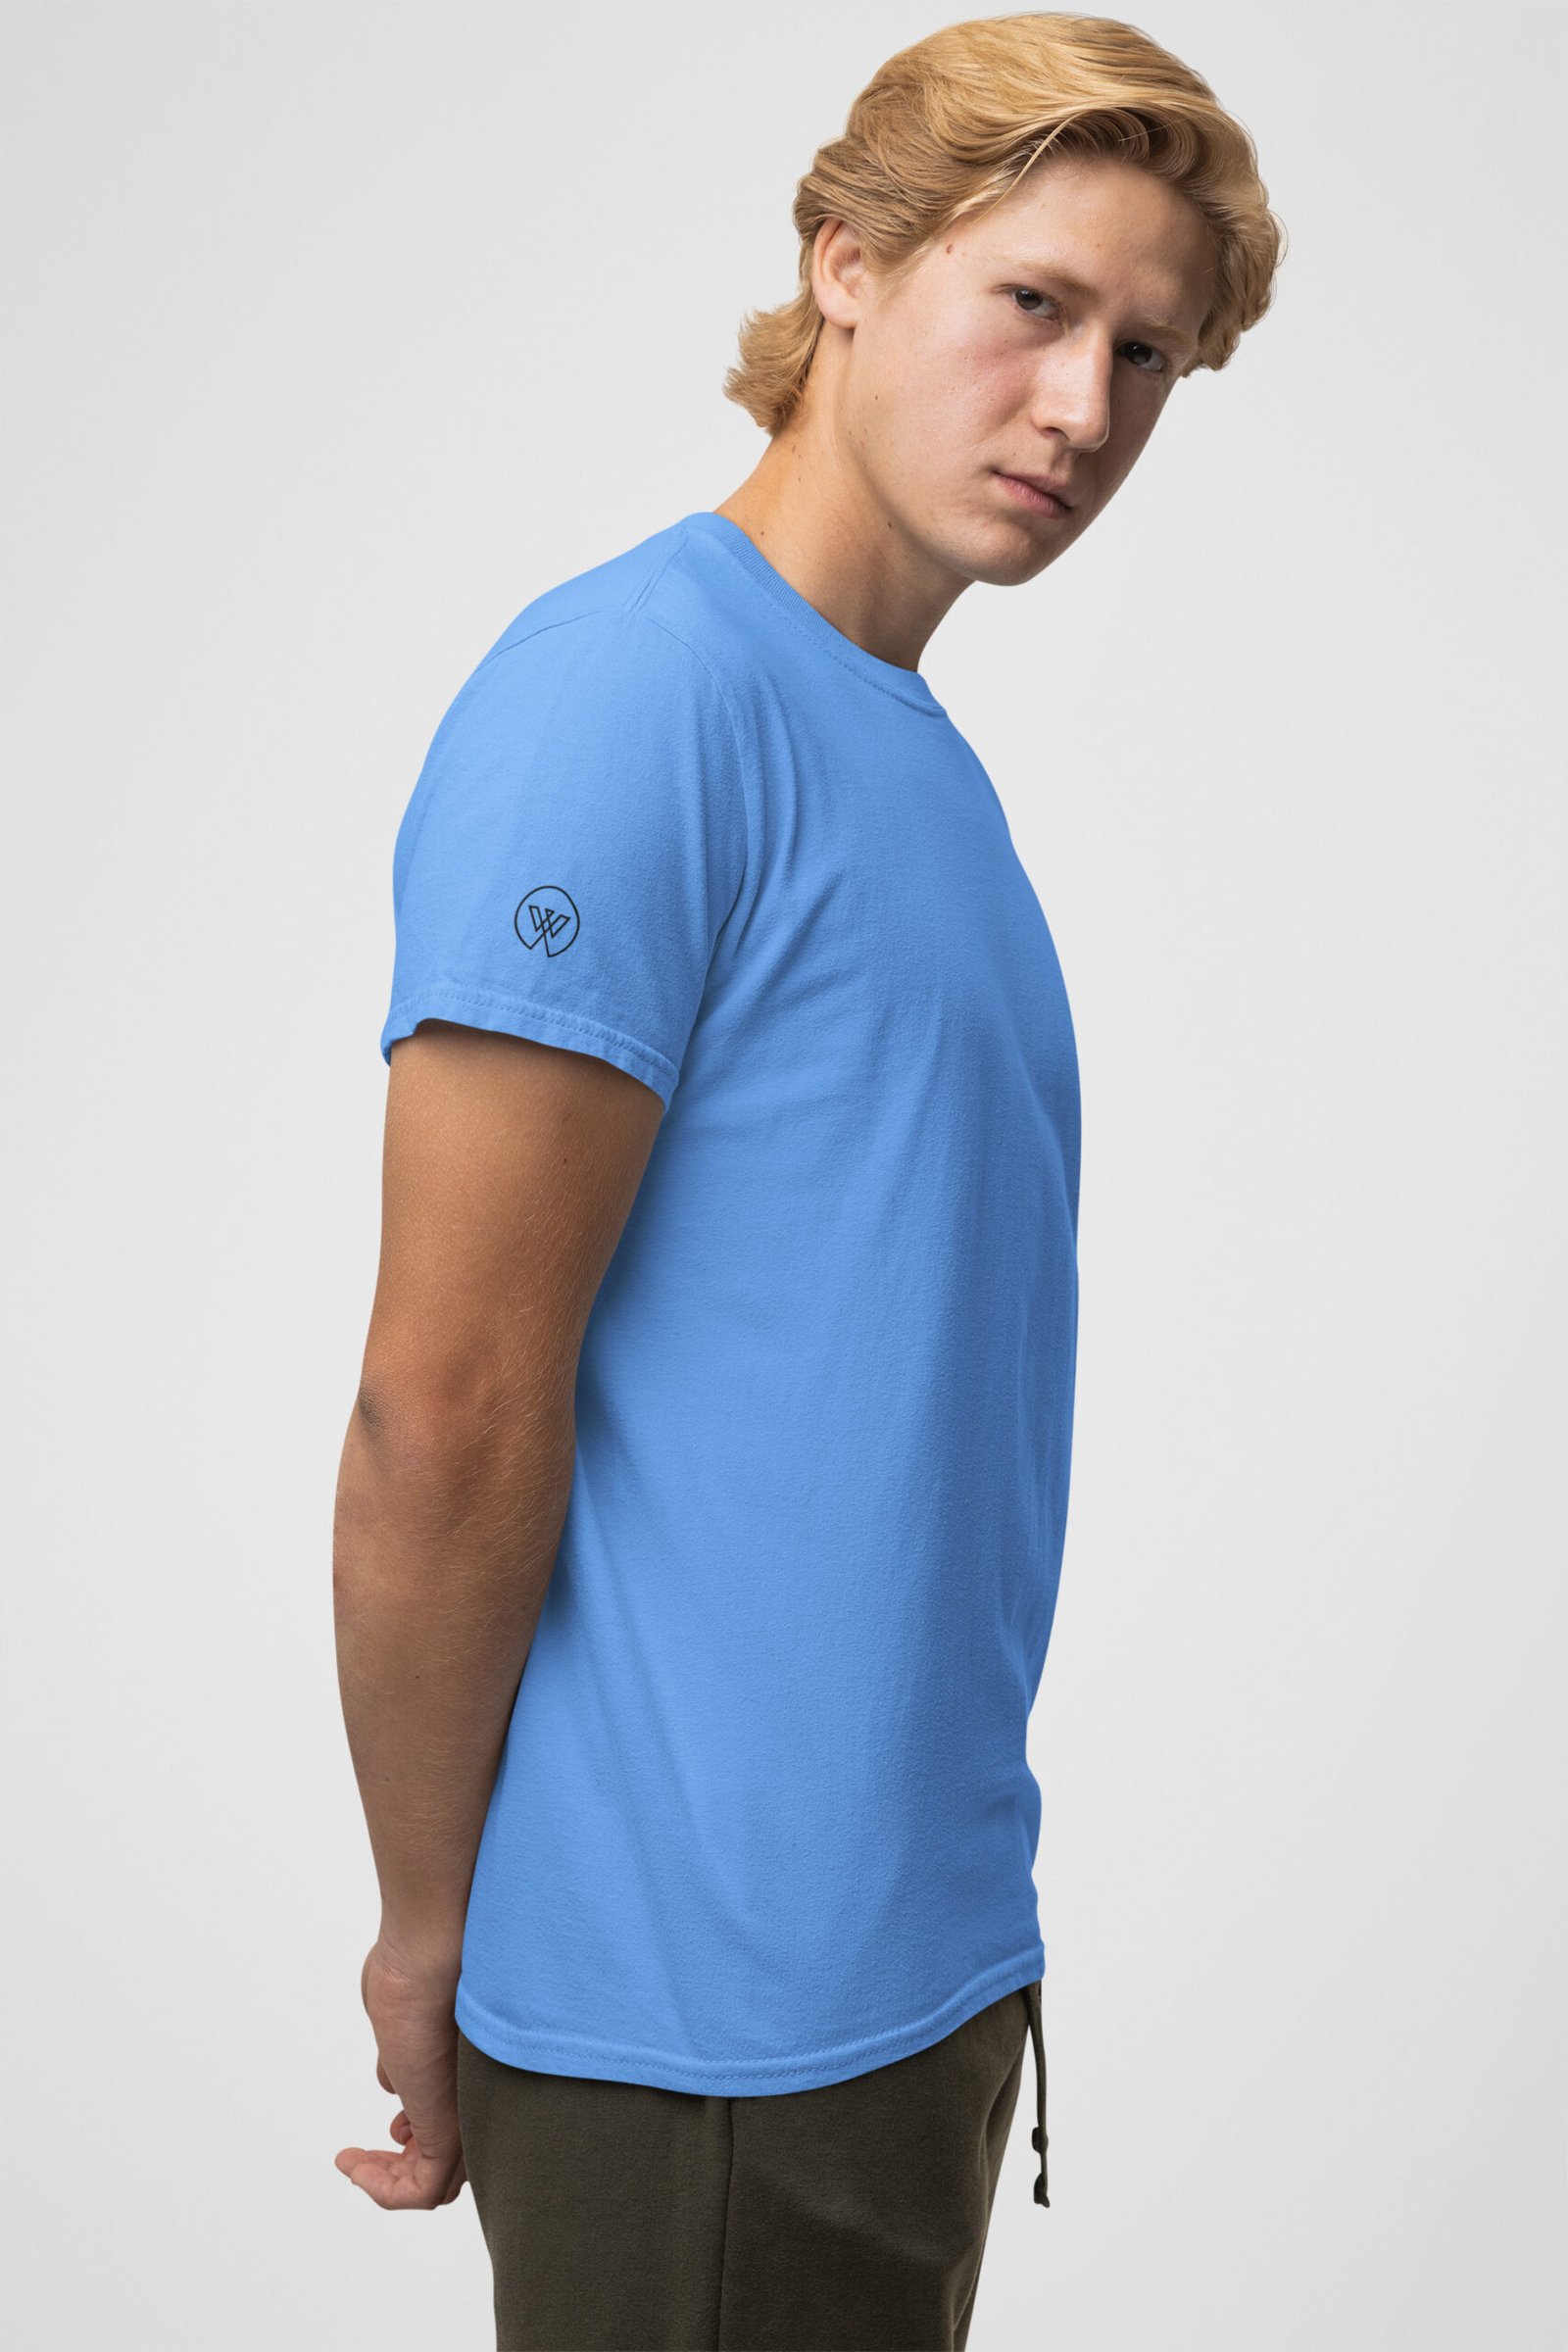 Wayward Wayz Solid T-Shirt Sky Blue-model side